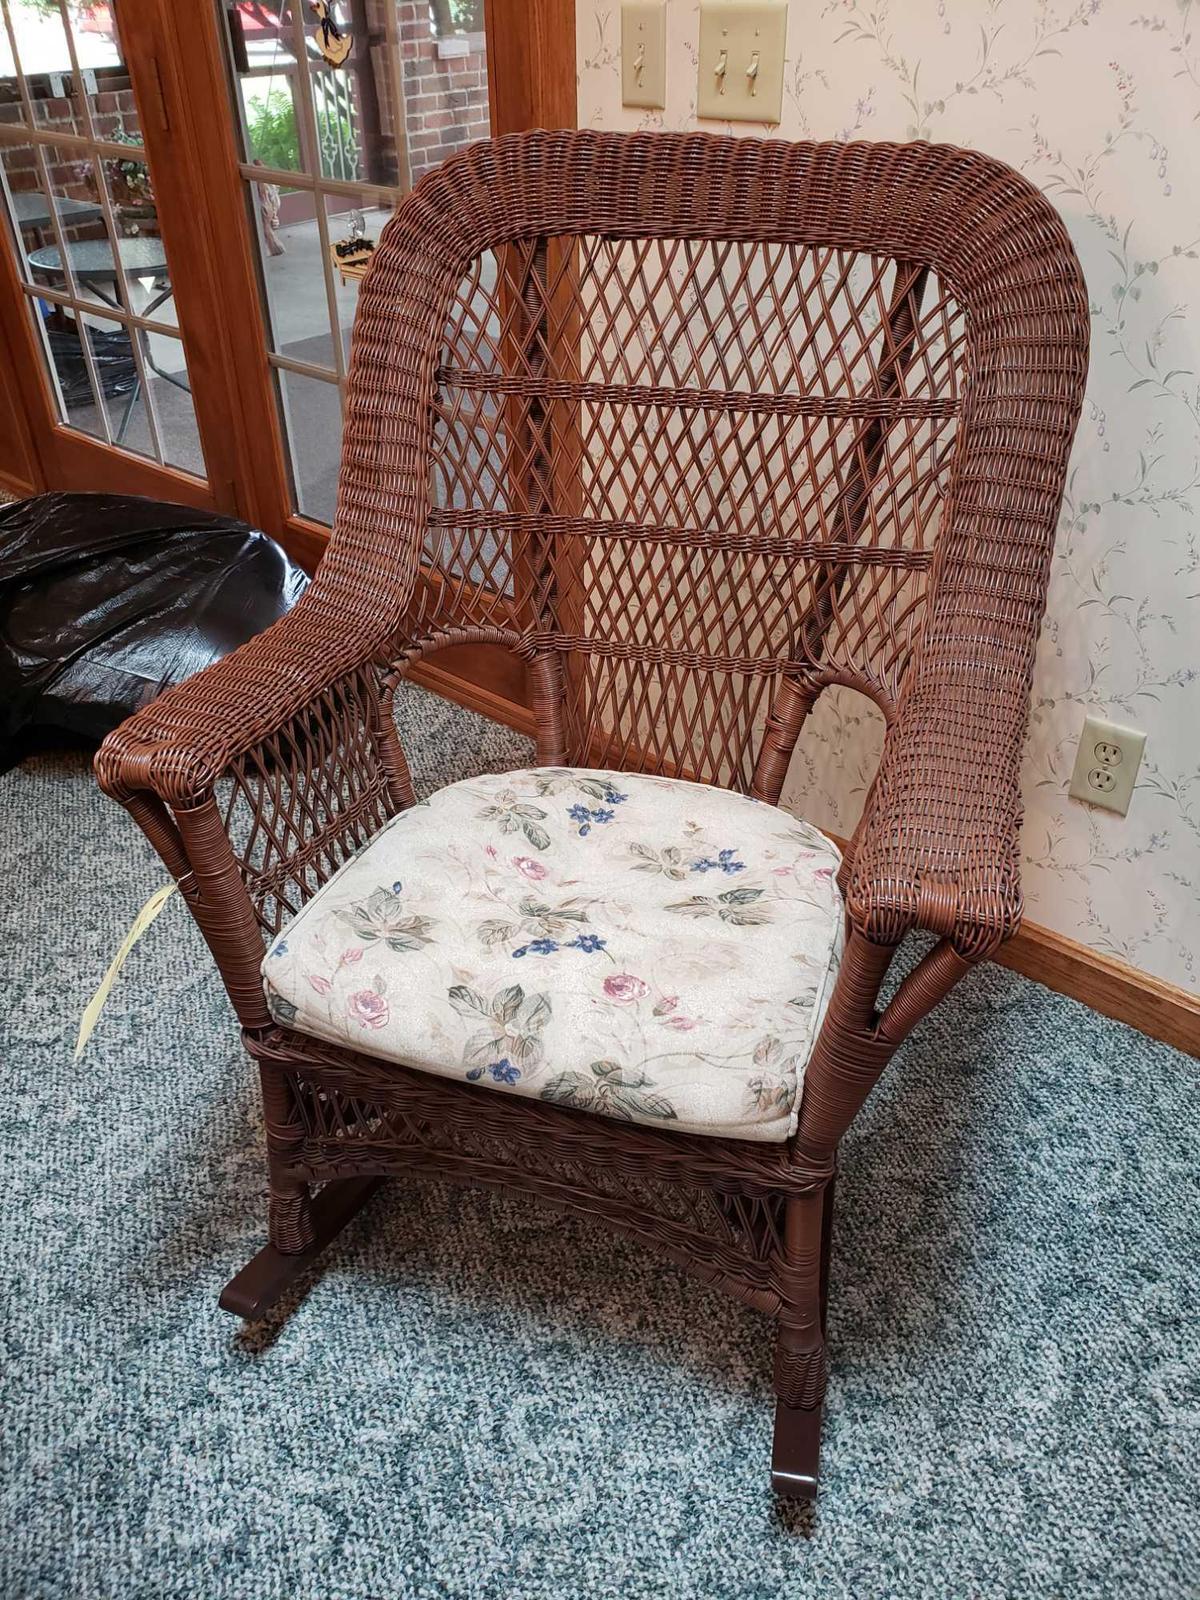 Wicker rocking chair